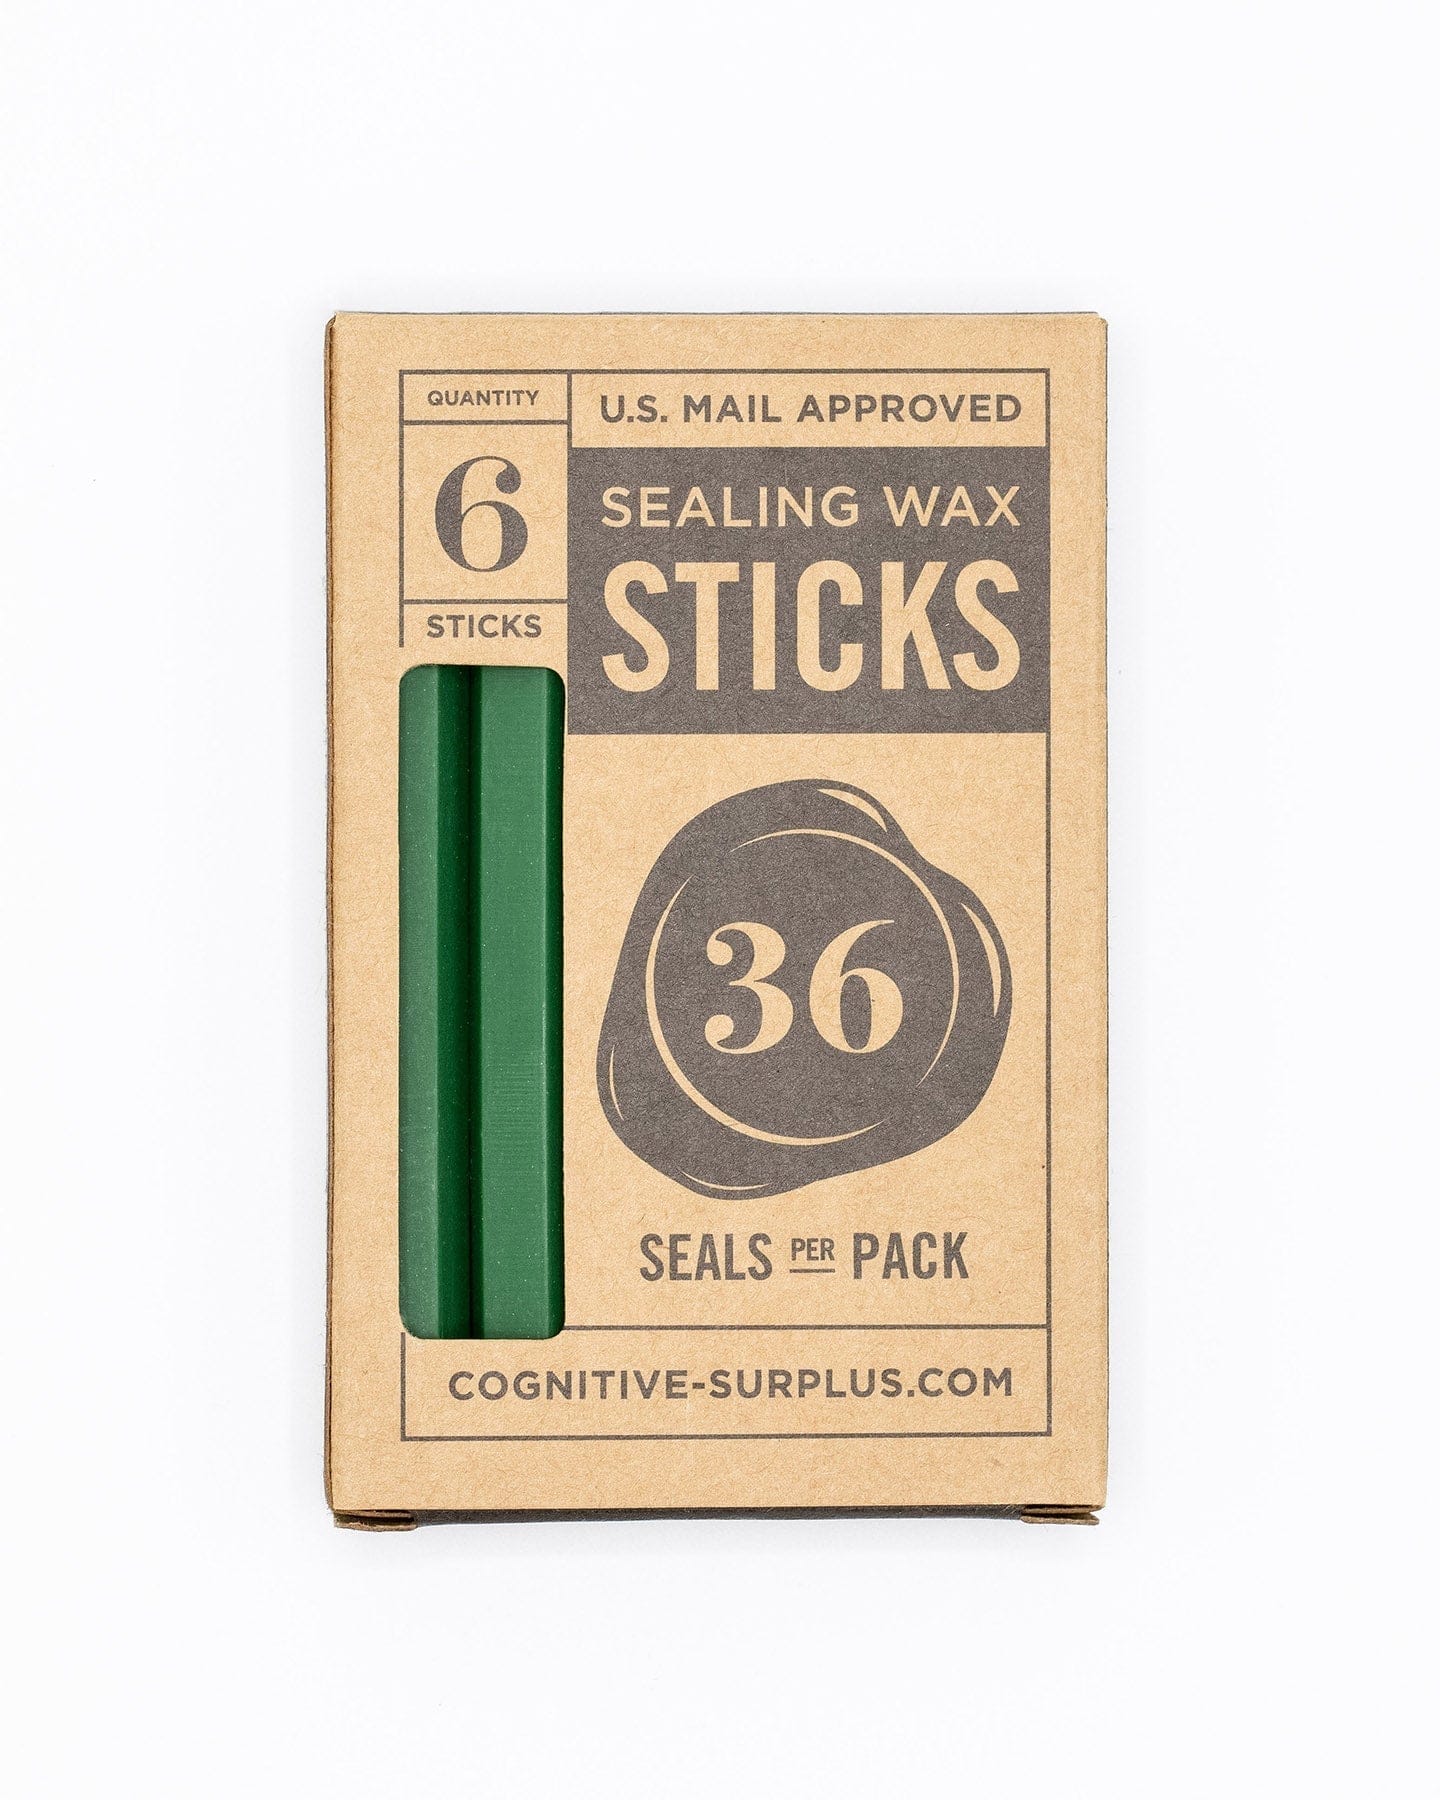 Pine Forest Green Sealing Wax Sticks Cognitive Surplus